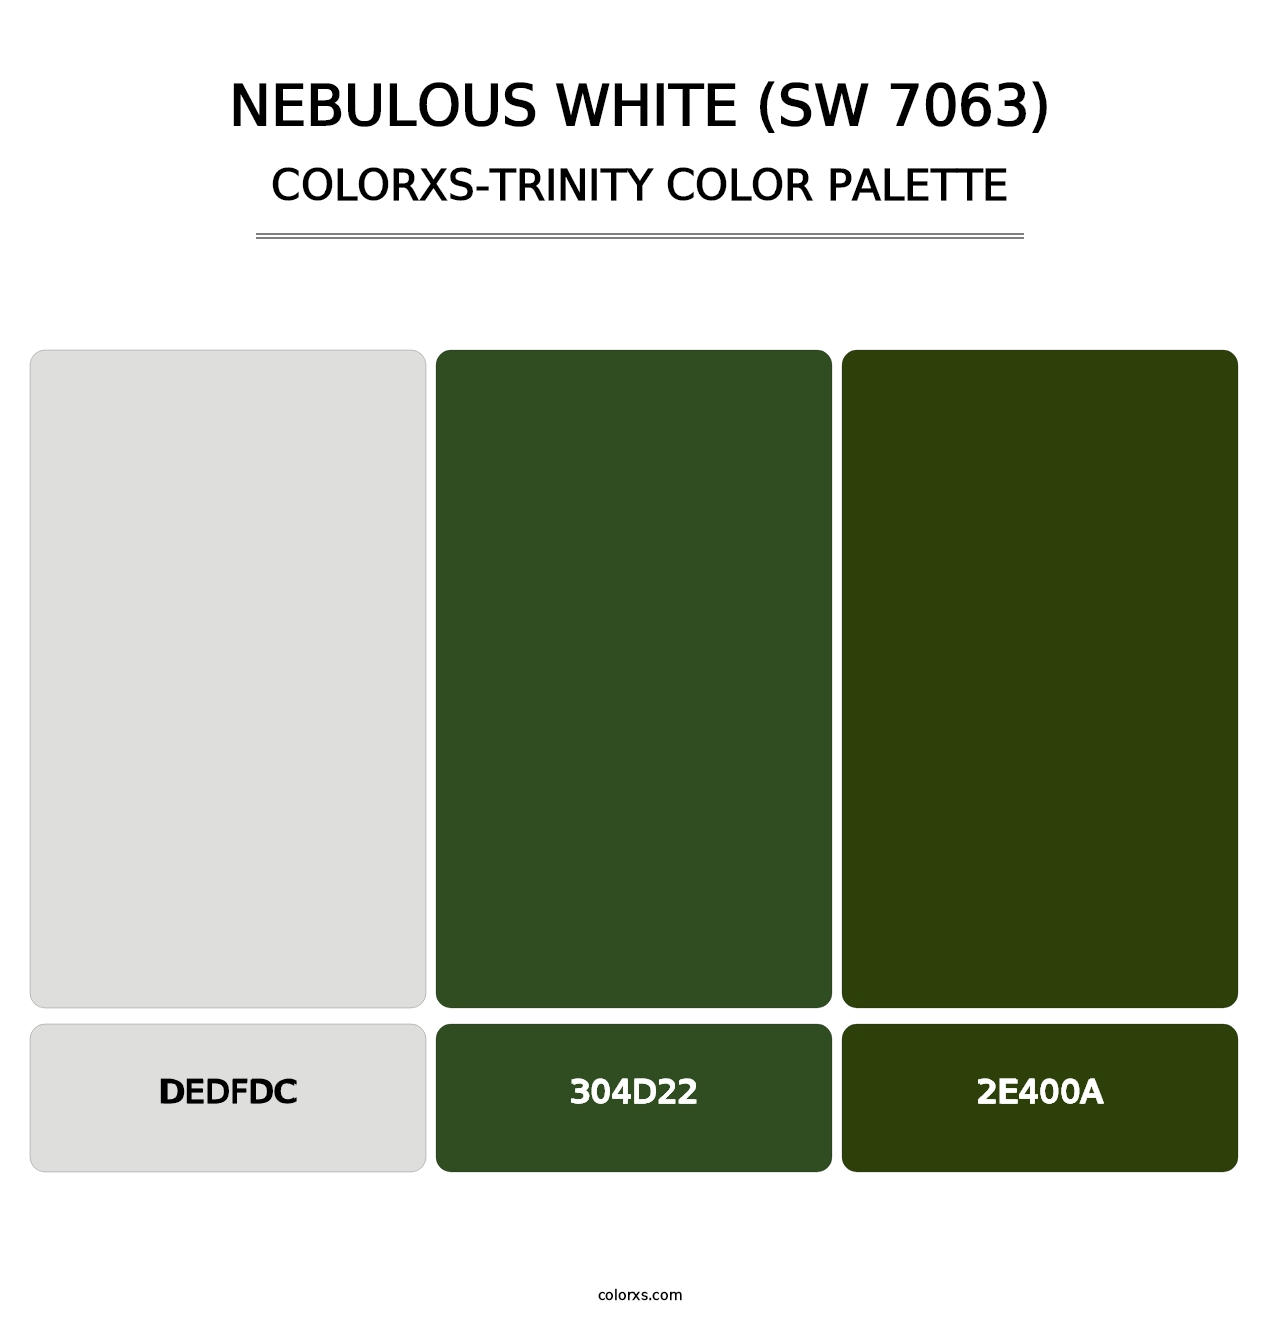 Nebulous White (SW 7063) - Colorxs Trinity Palette